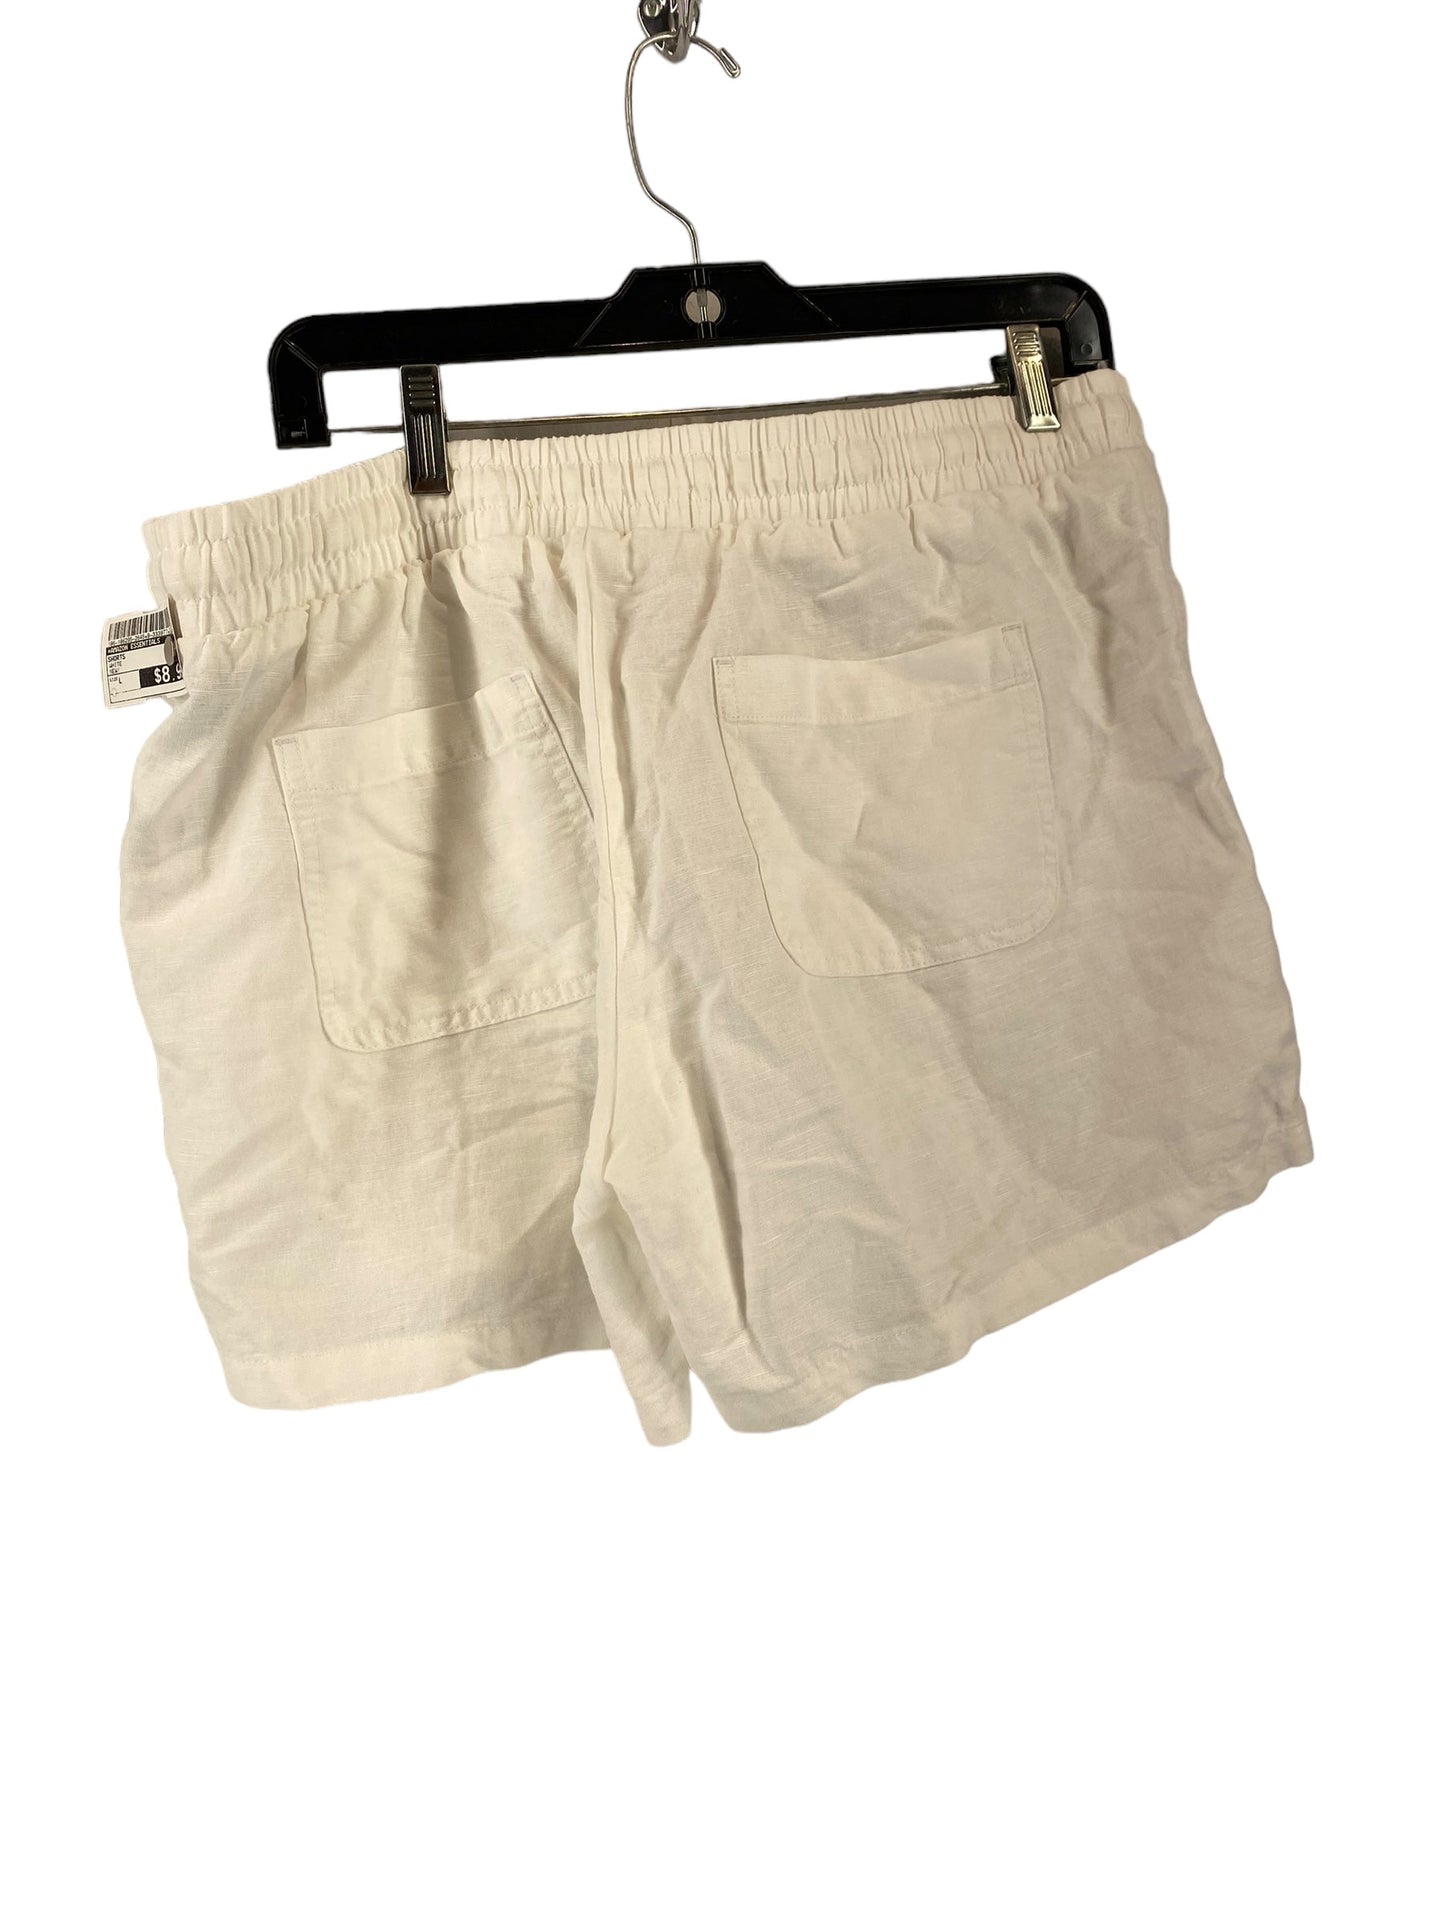 White Shorts Amazon Essentials, Size L